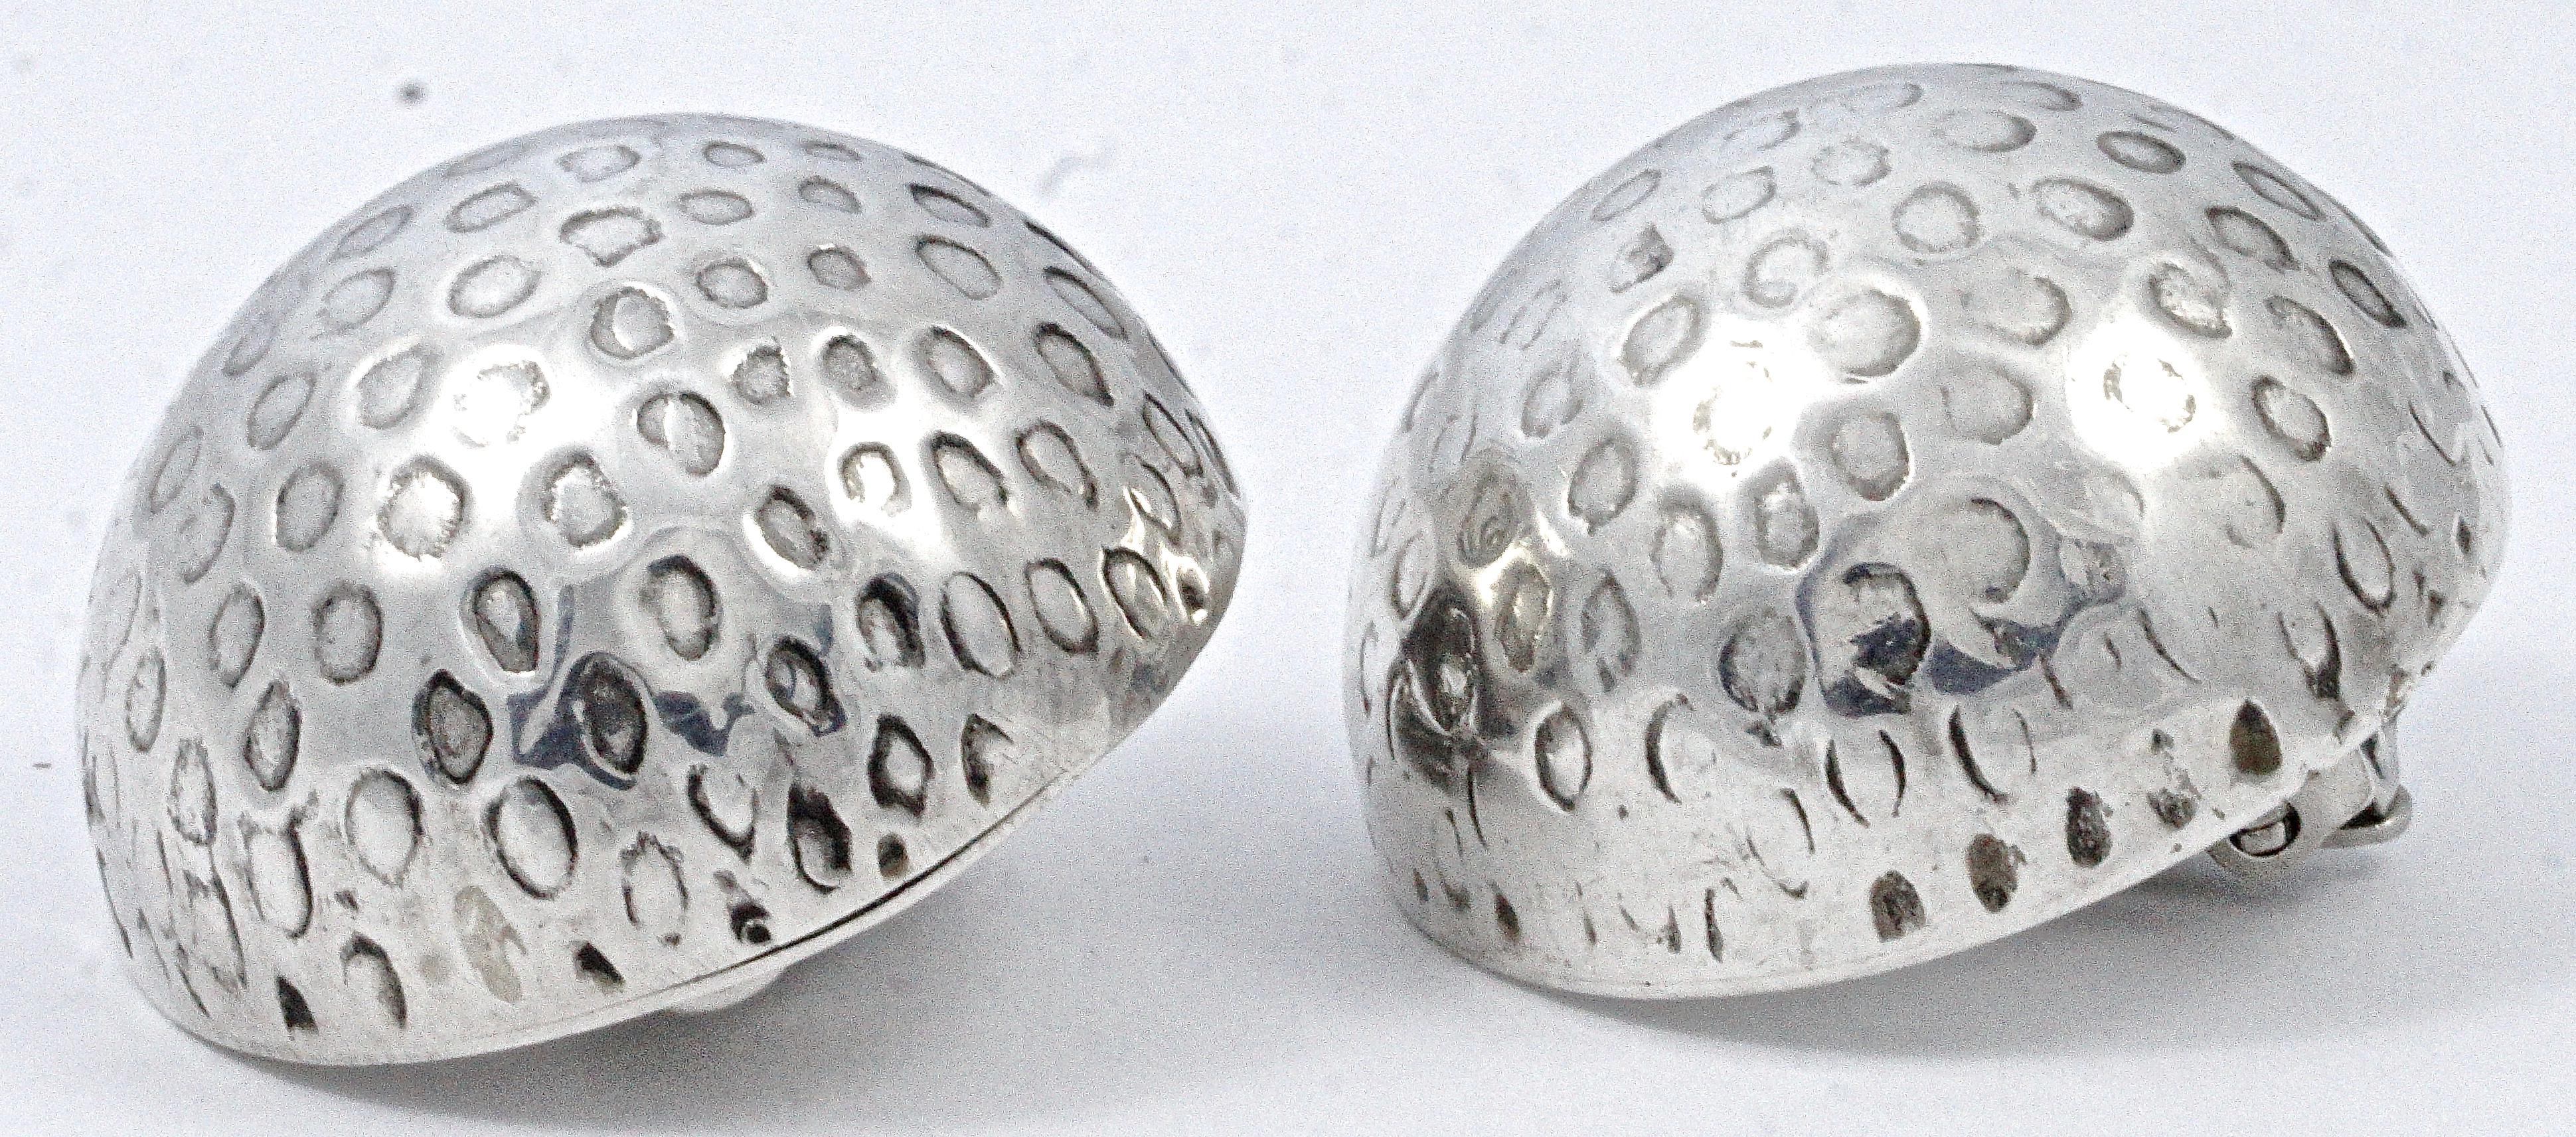 vintage taxco silver earrings